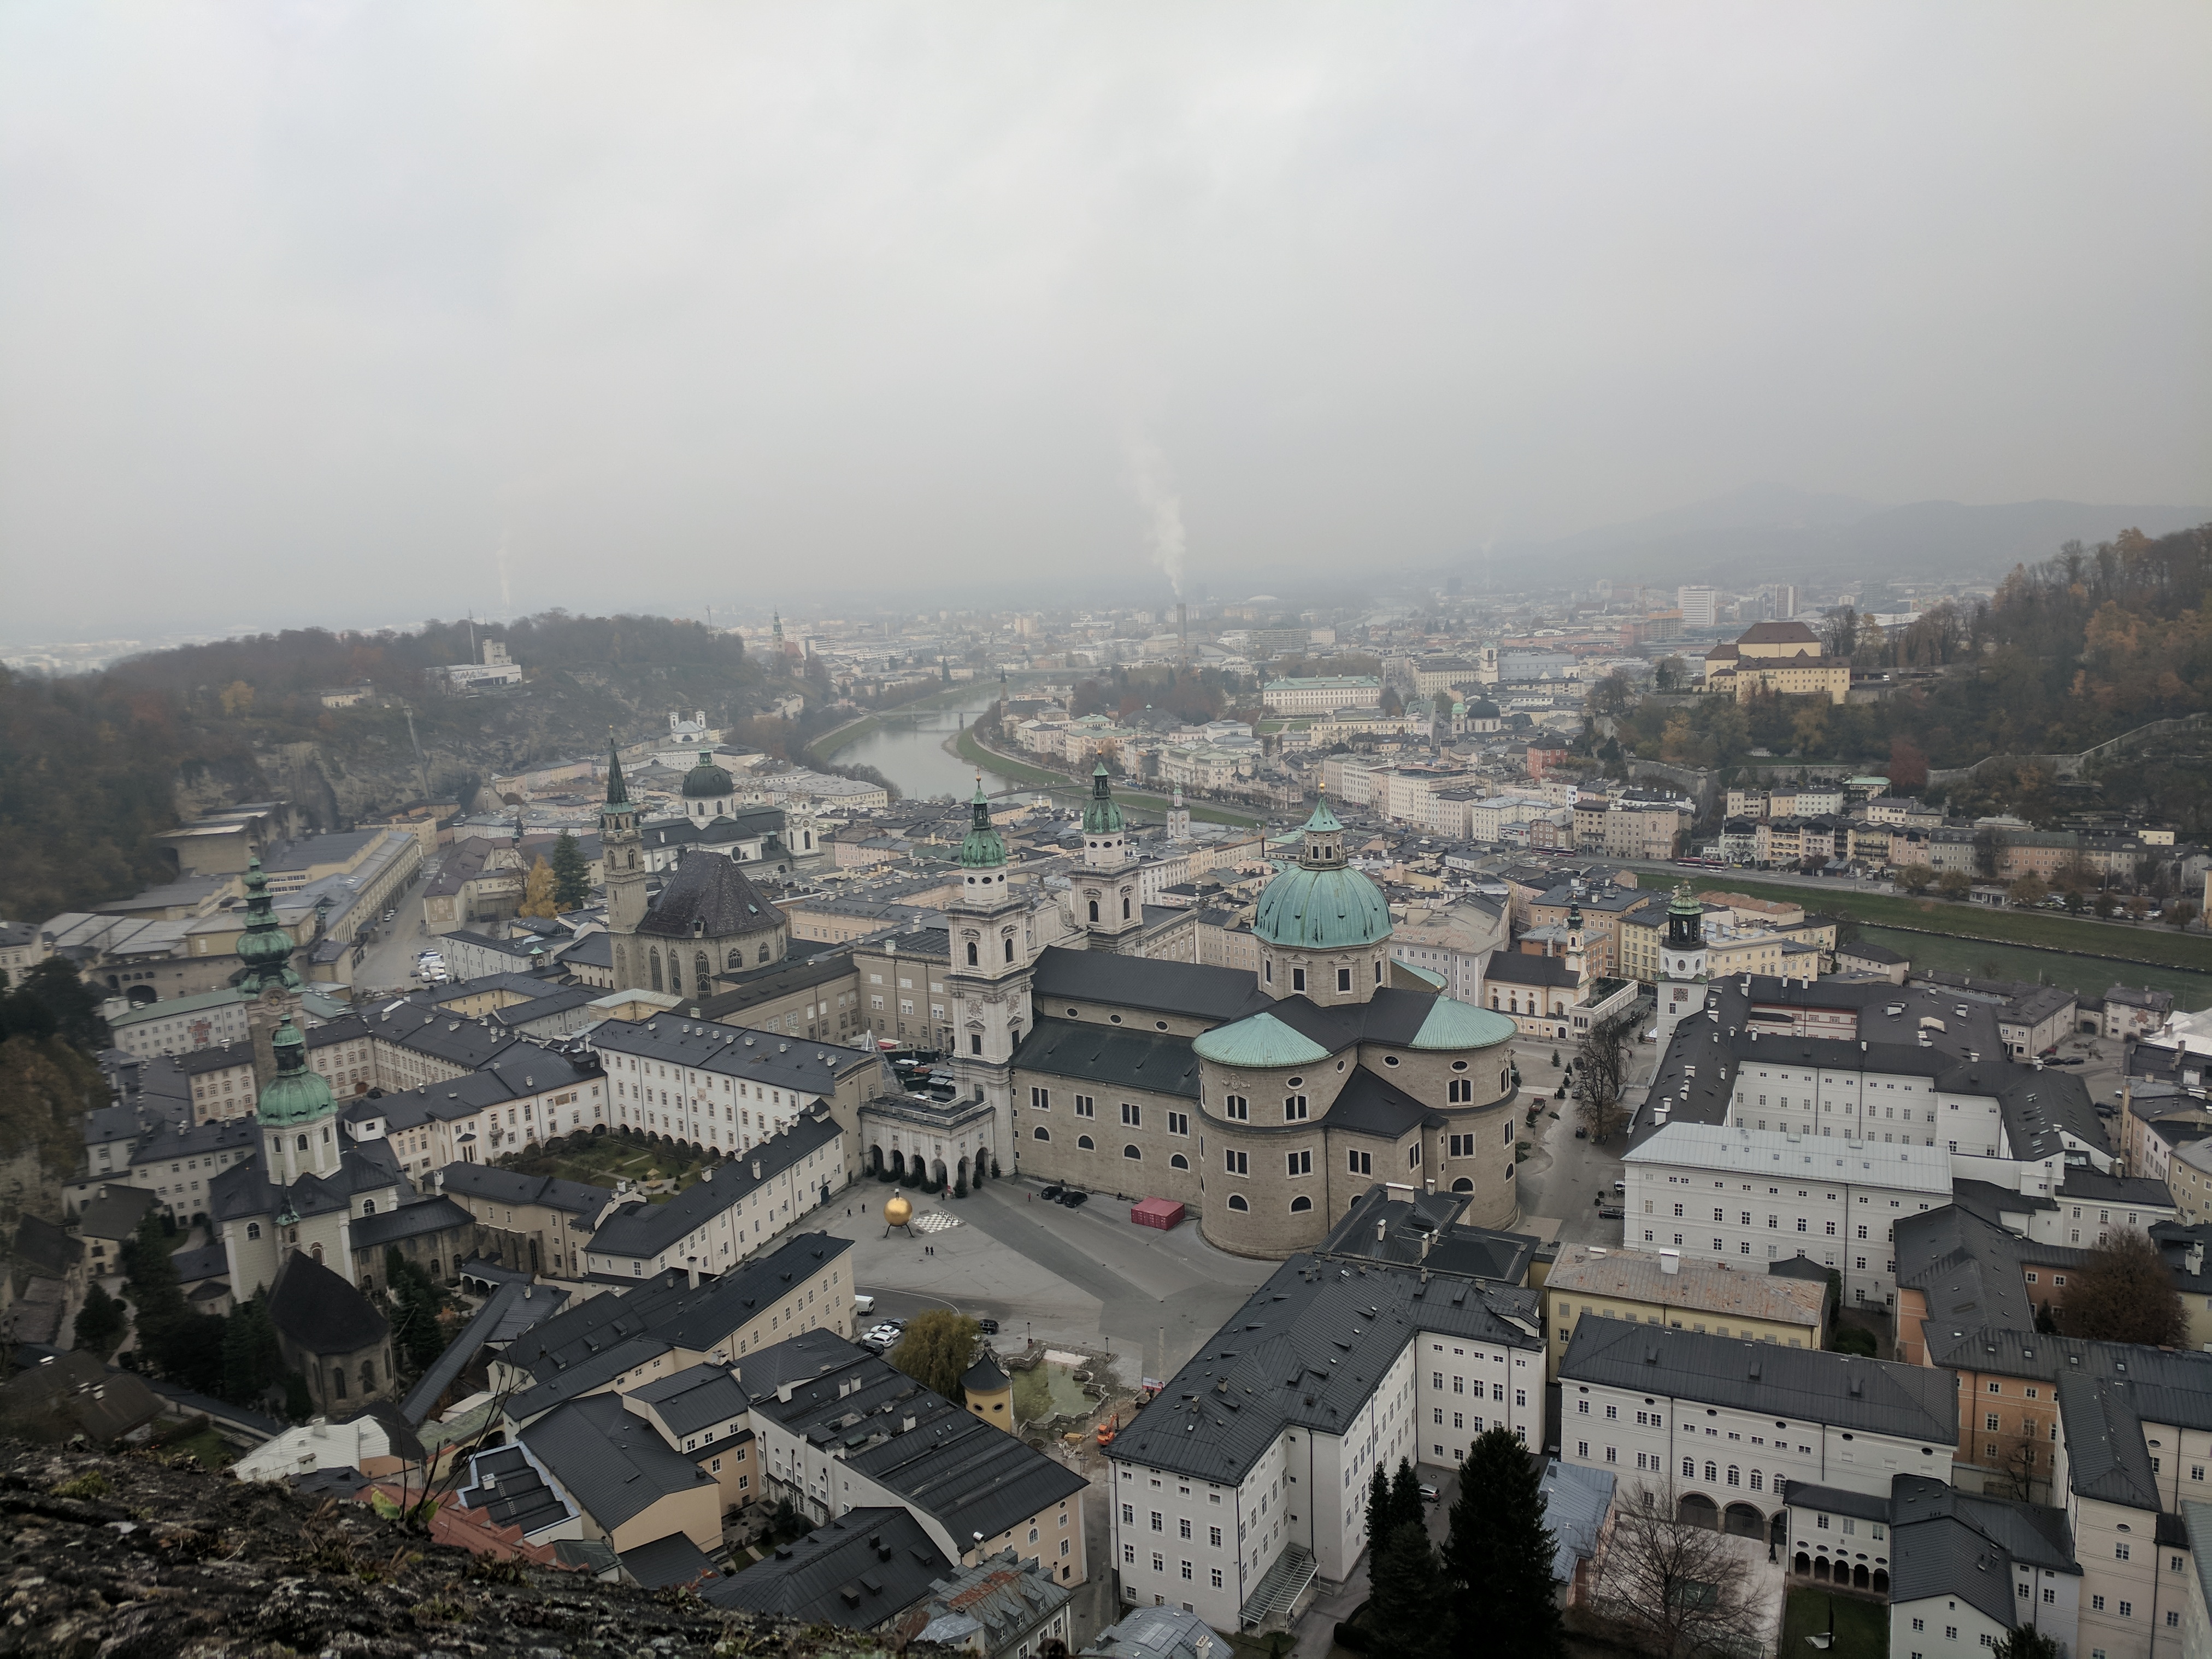 IMG 20171118 101108 - Quick Trip to Salzburg, Austria